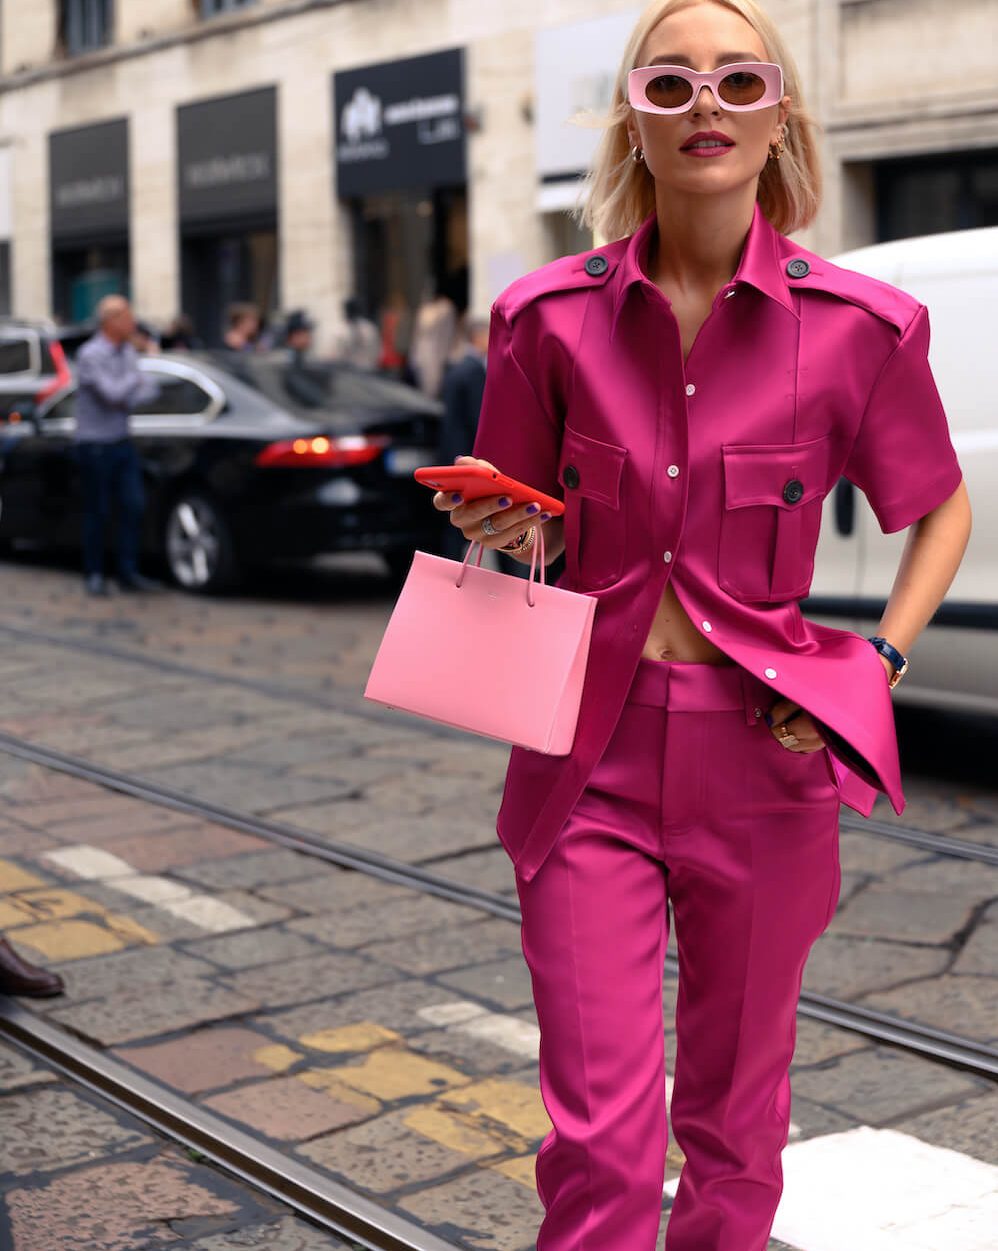 Lady dressed in pink London Fashion Week